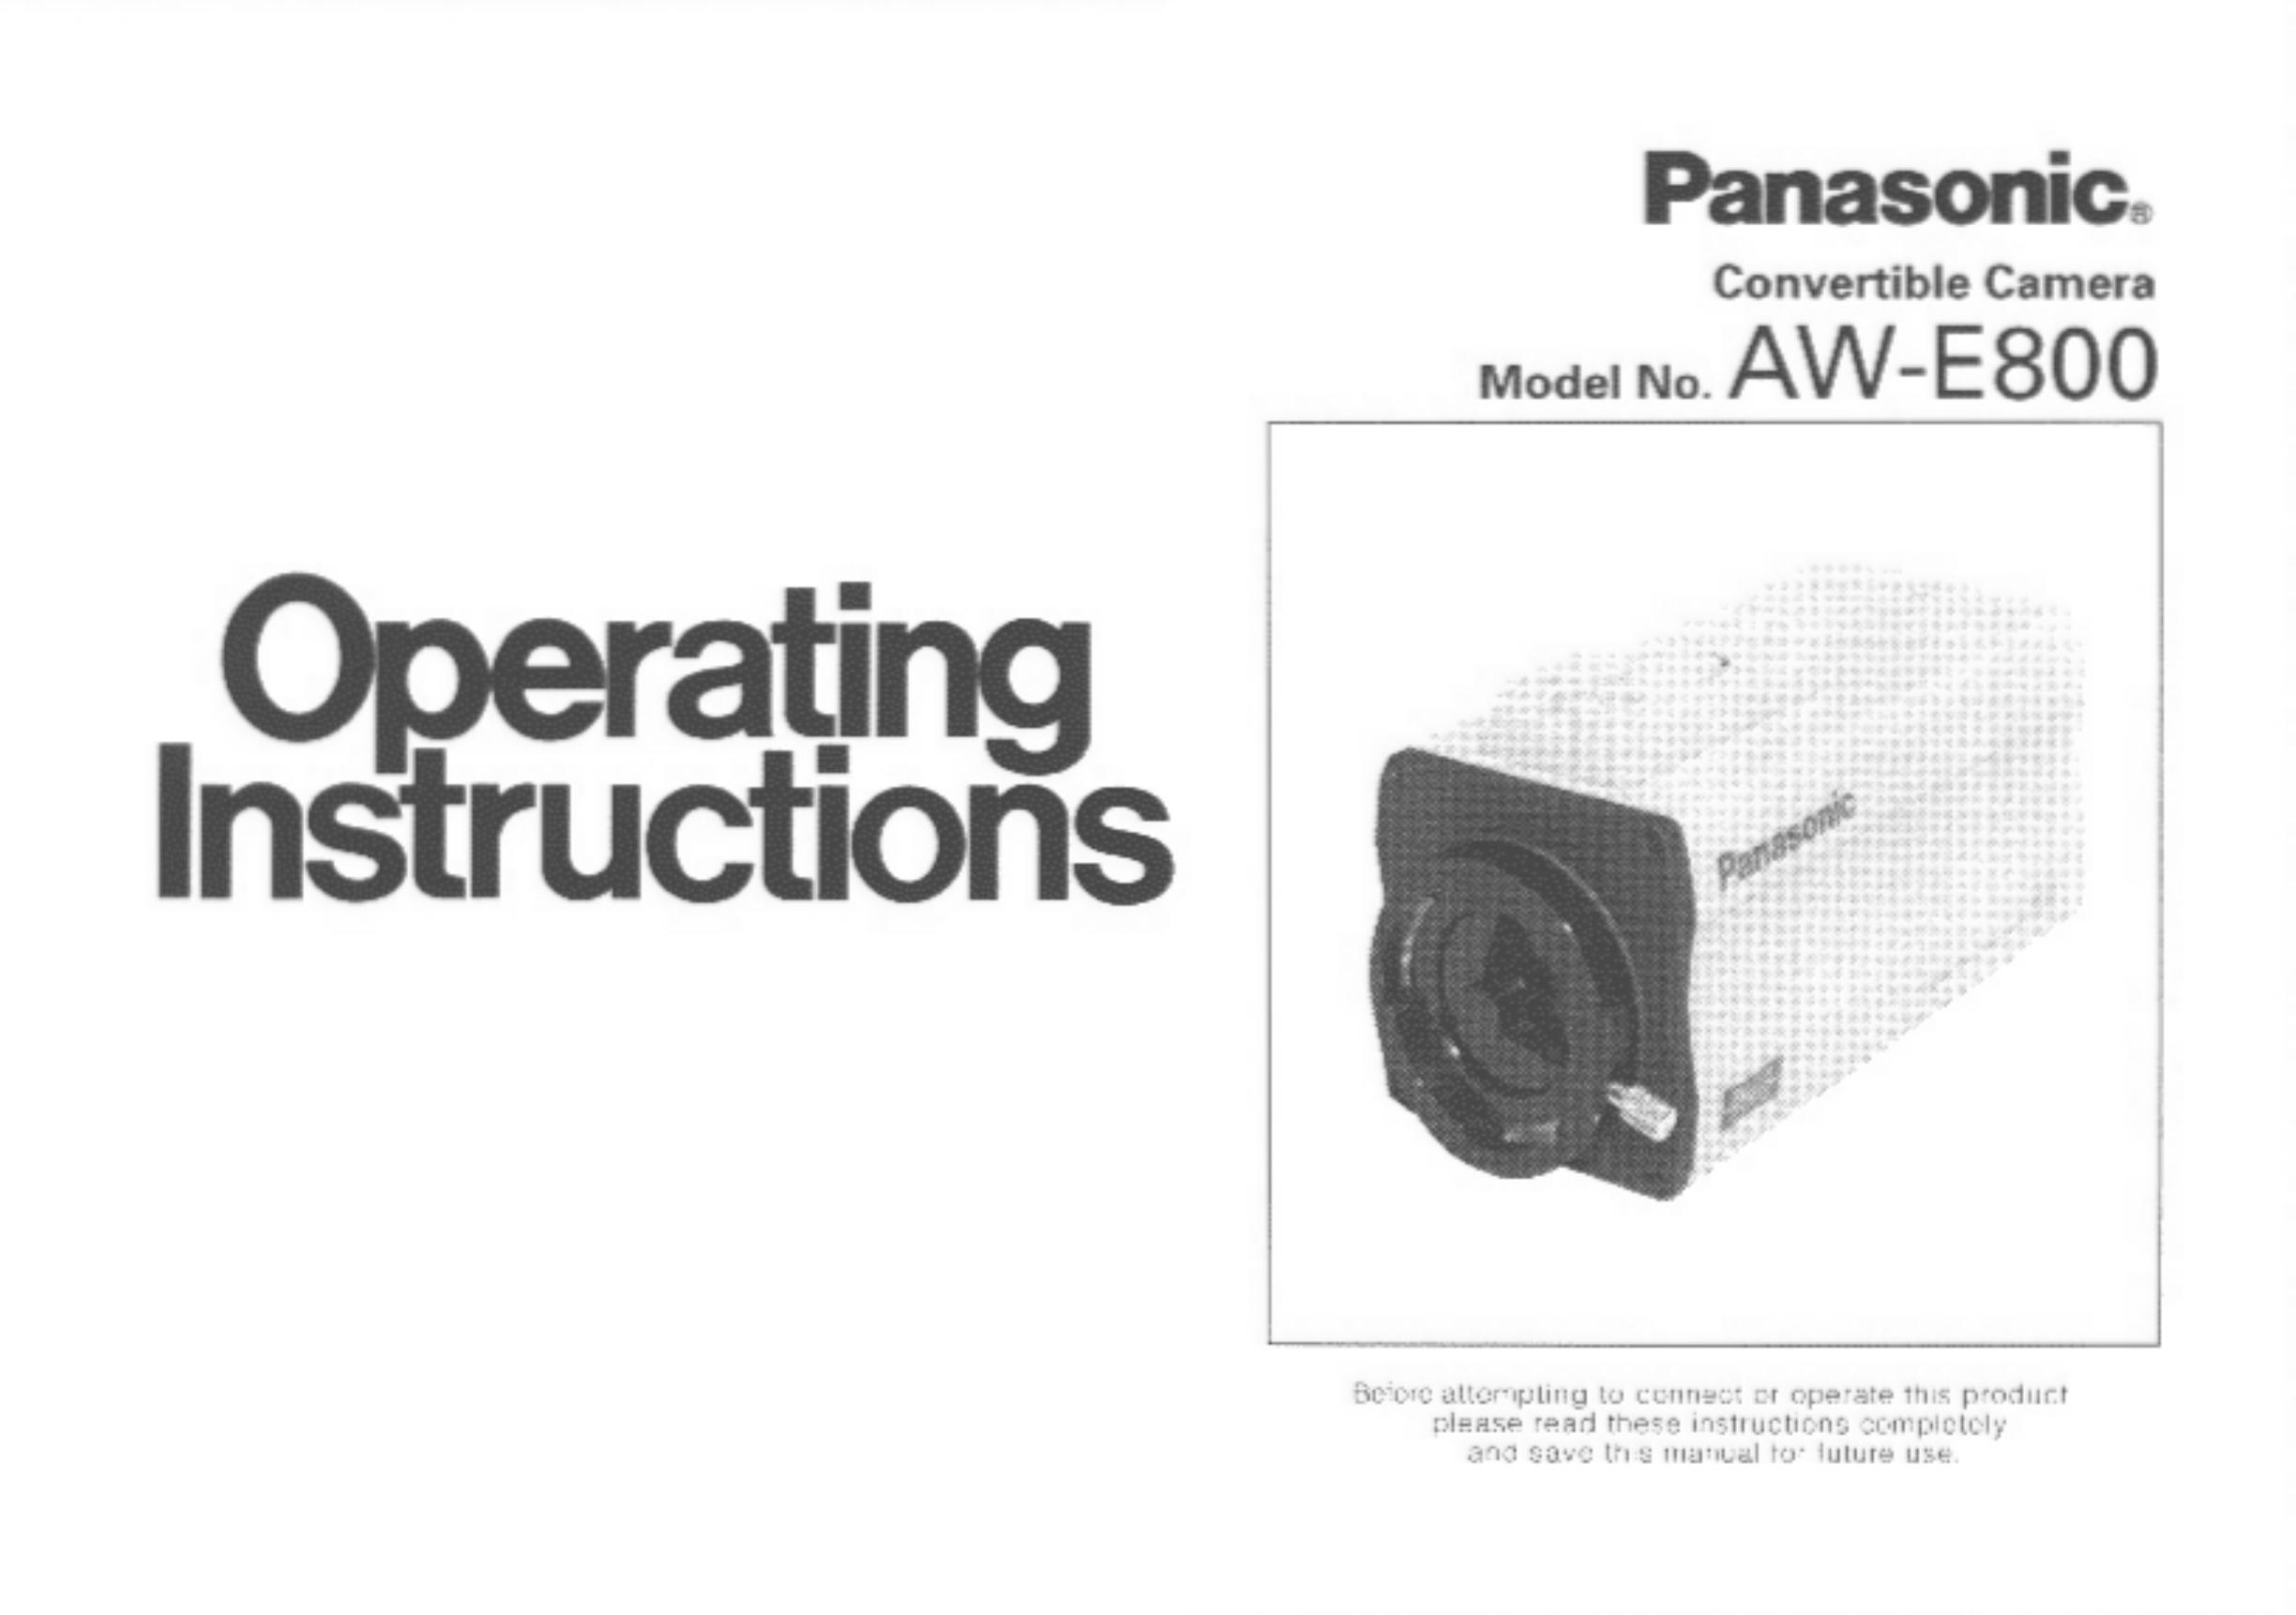 Panasonic AW-E800 Digital Camera User Manual